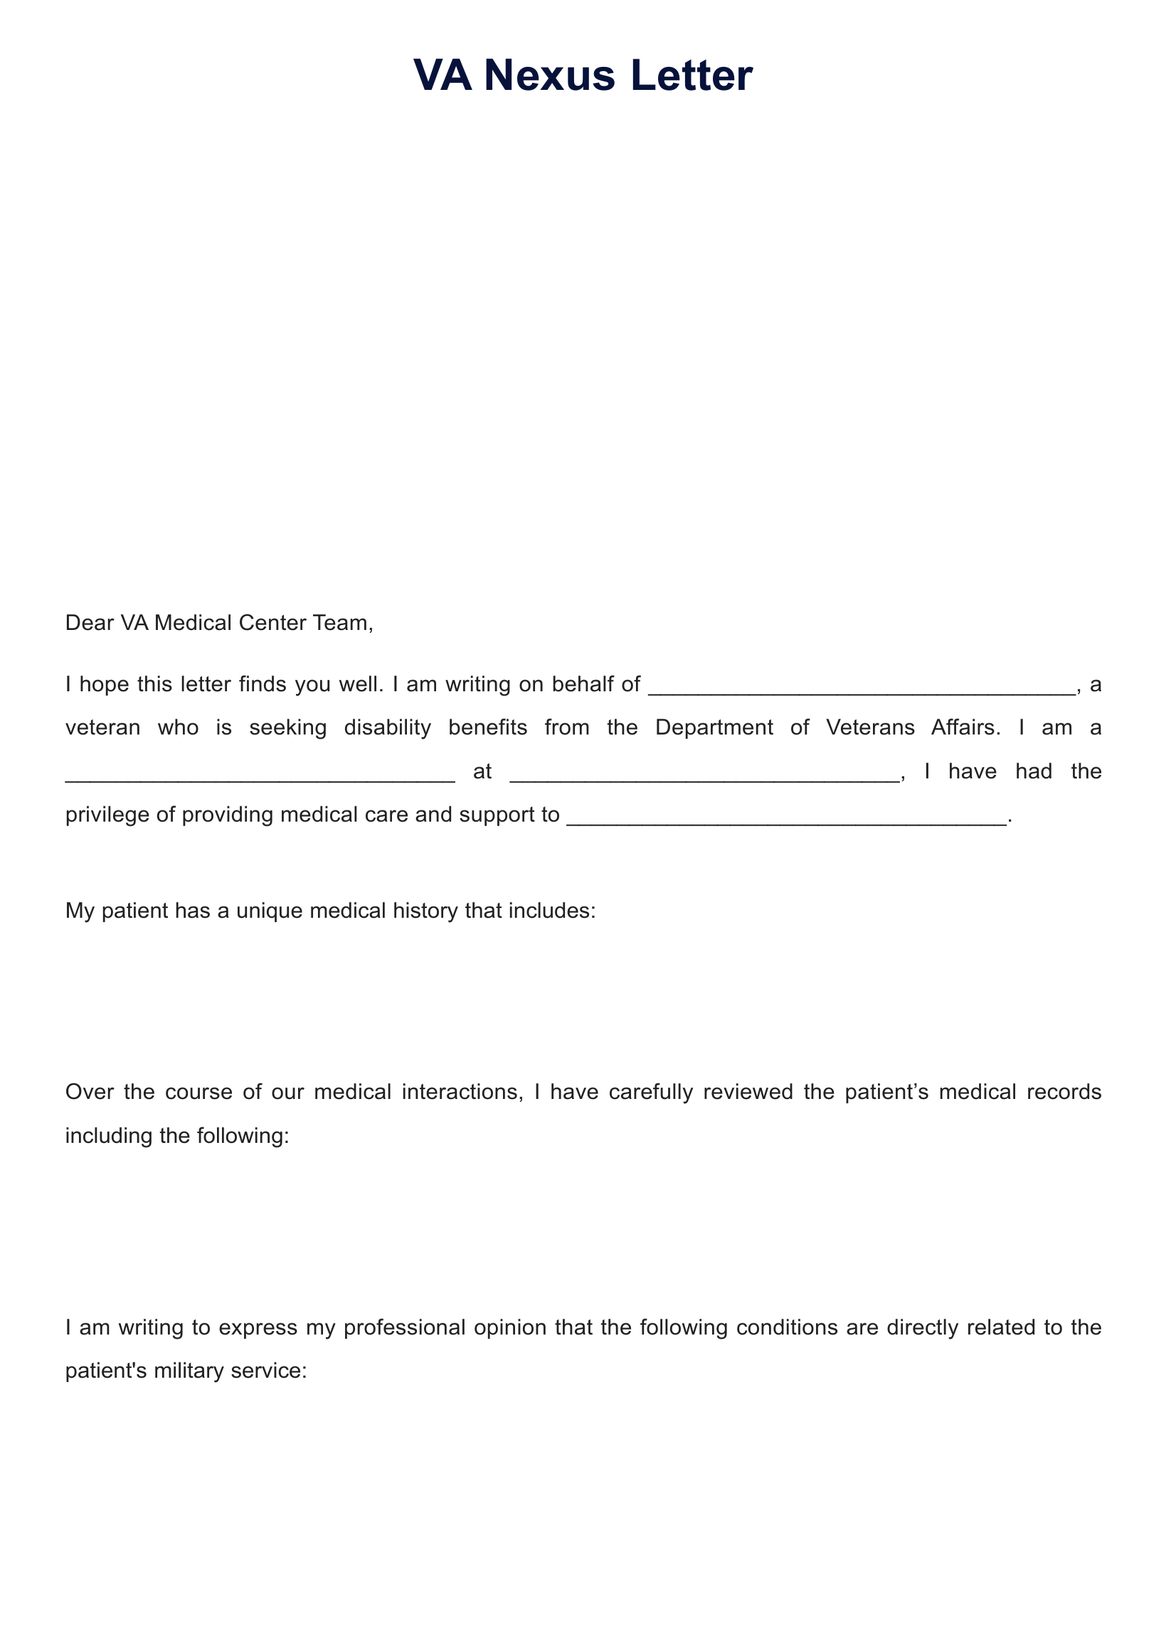 VA Nexus Letter Template PDF Example